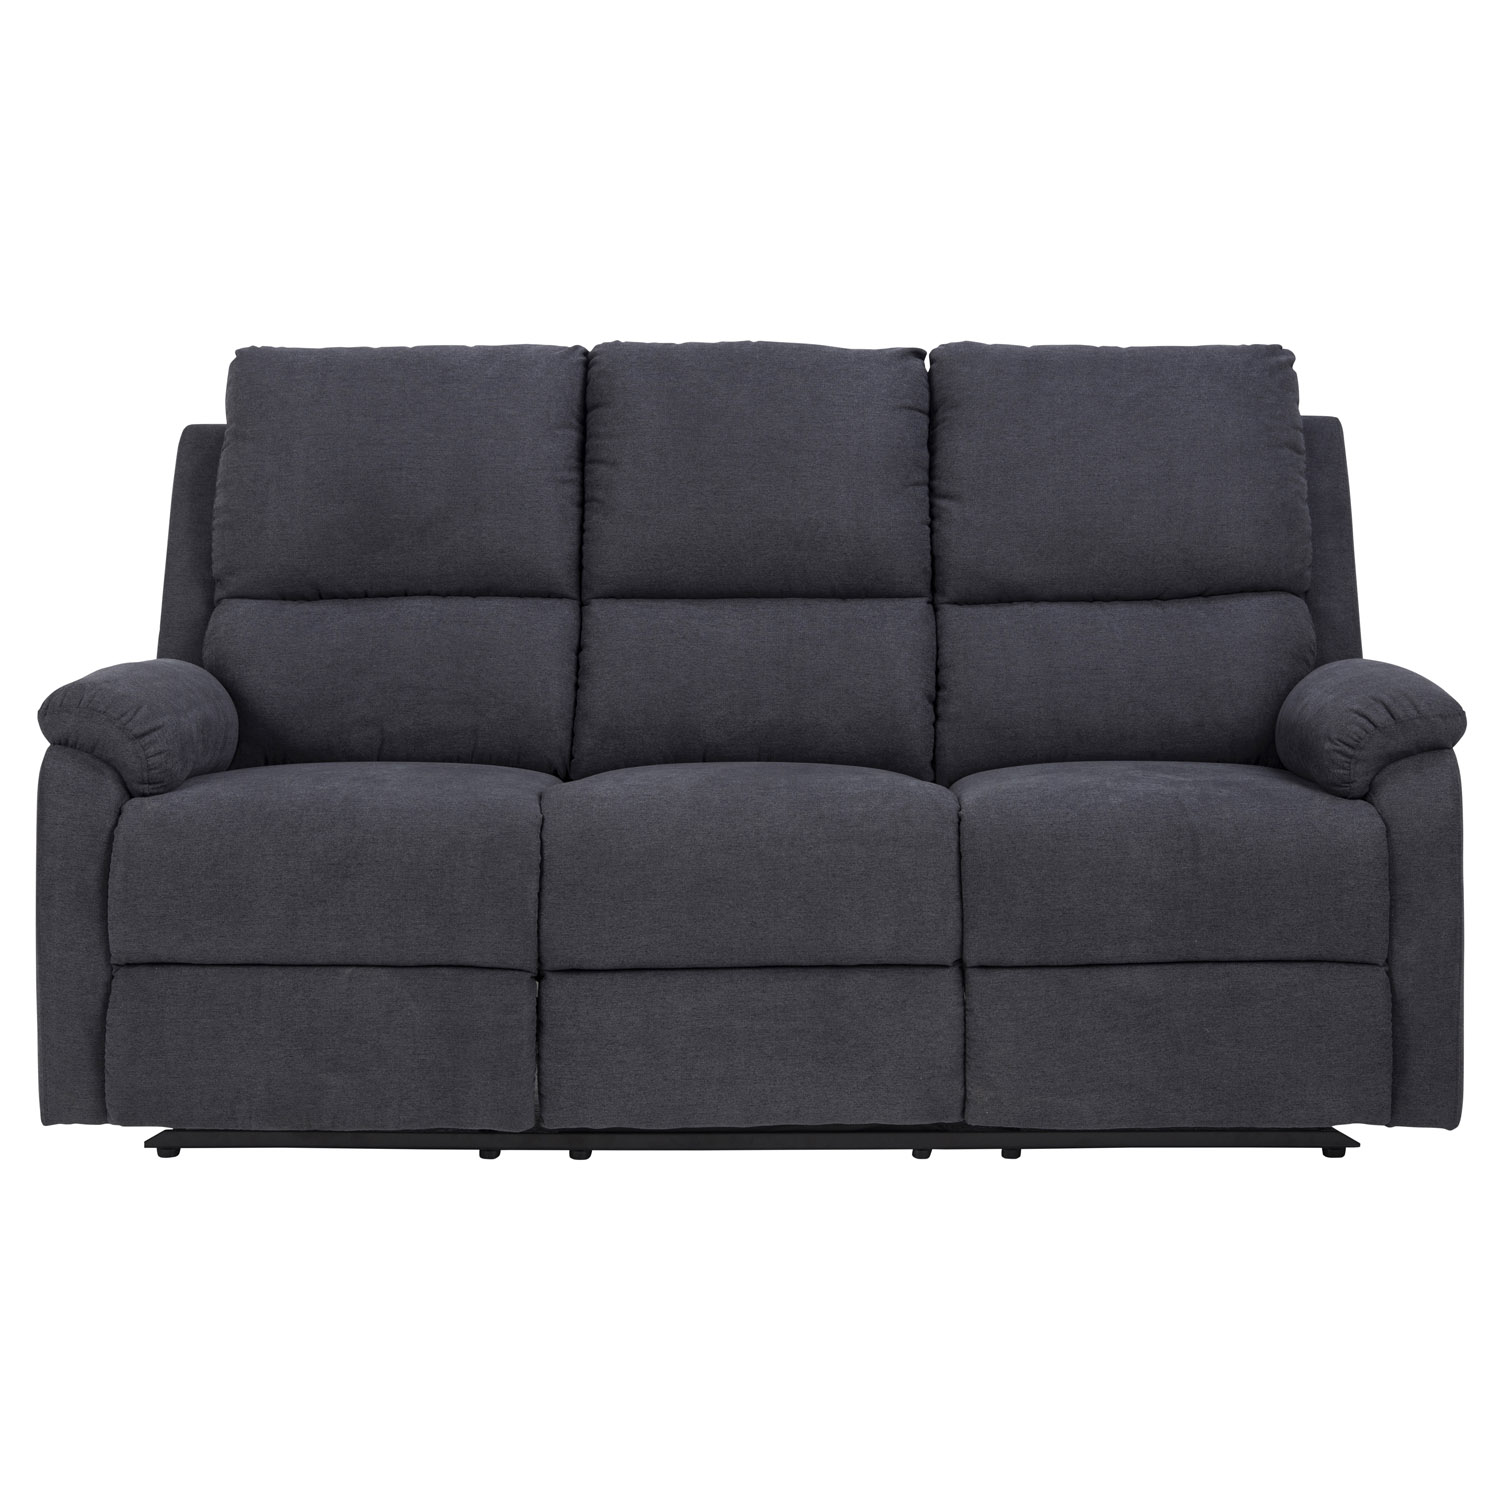 ACT NORDIC Sabia 3 pers. sofa, m. manuel recliner - mørkegrå stof og metal